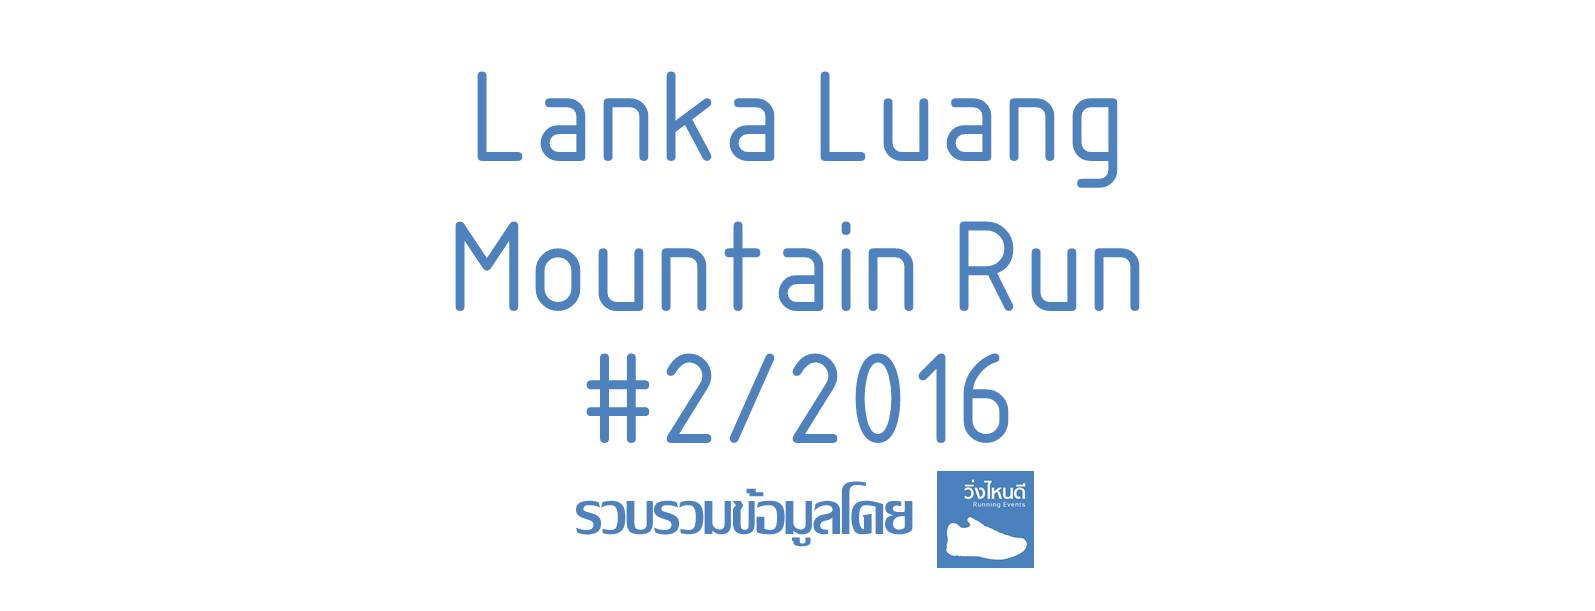 Lanka Luang Mountain Run #2/2016